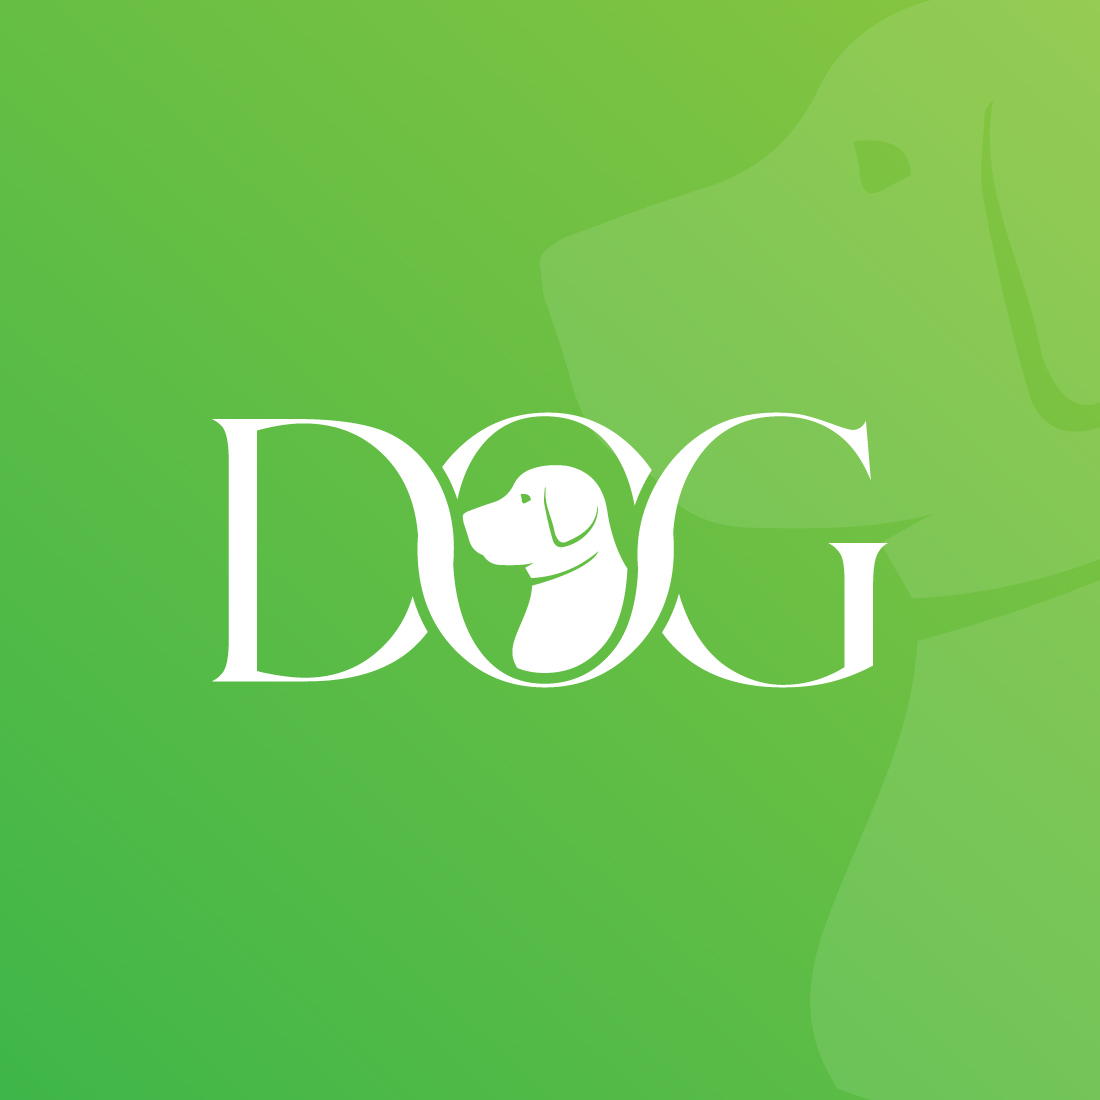 DOG logo preview image.